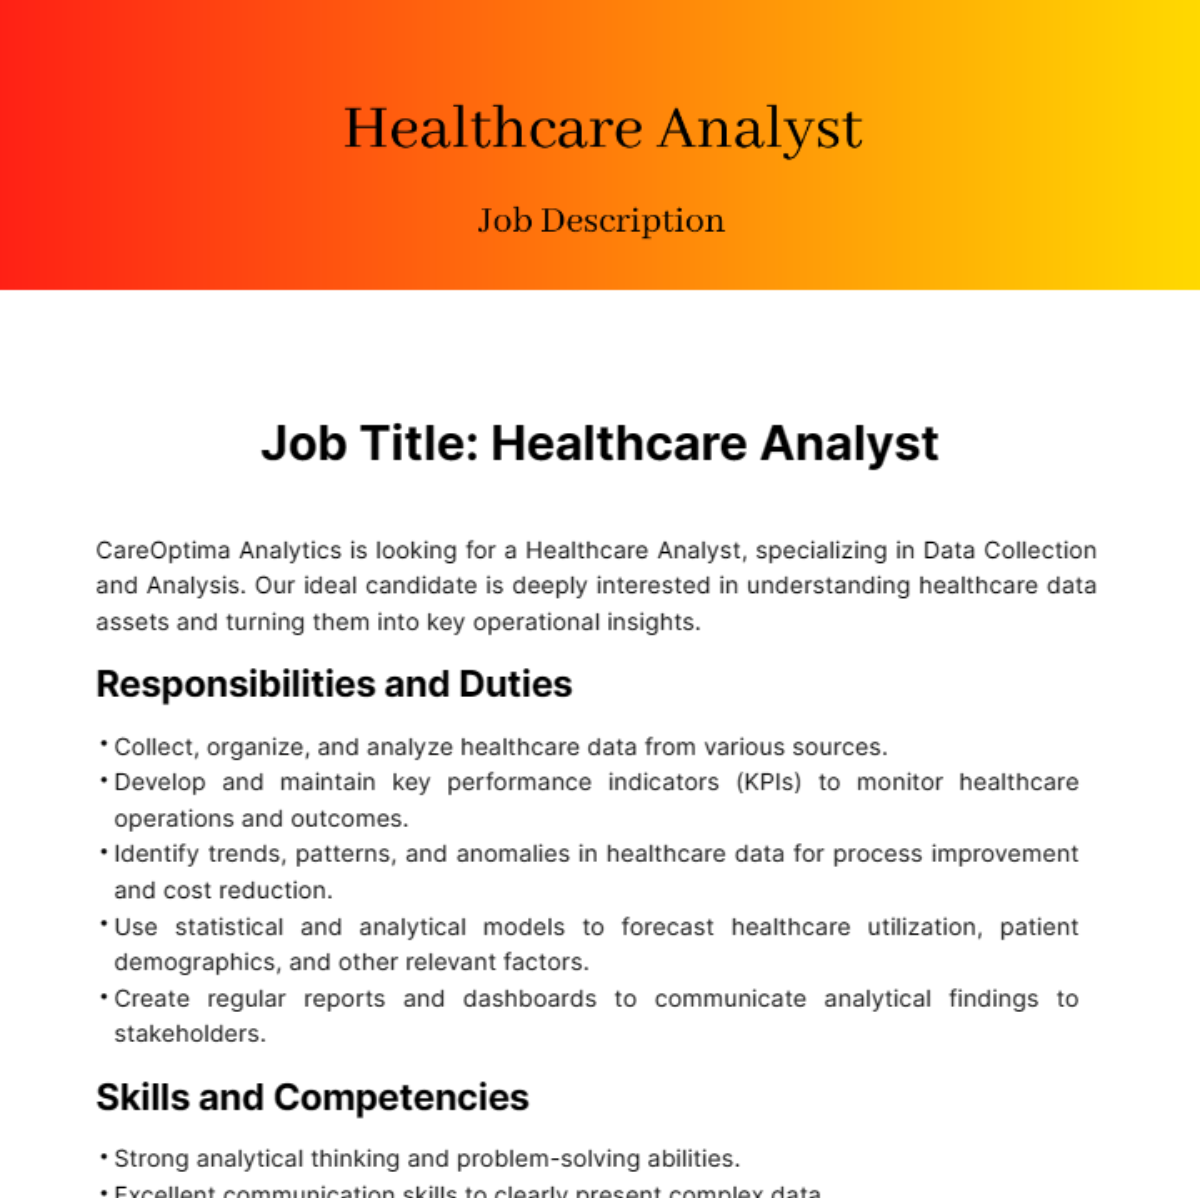 Healthcare Analyst Job Description Template